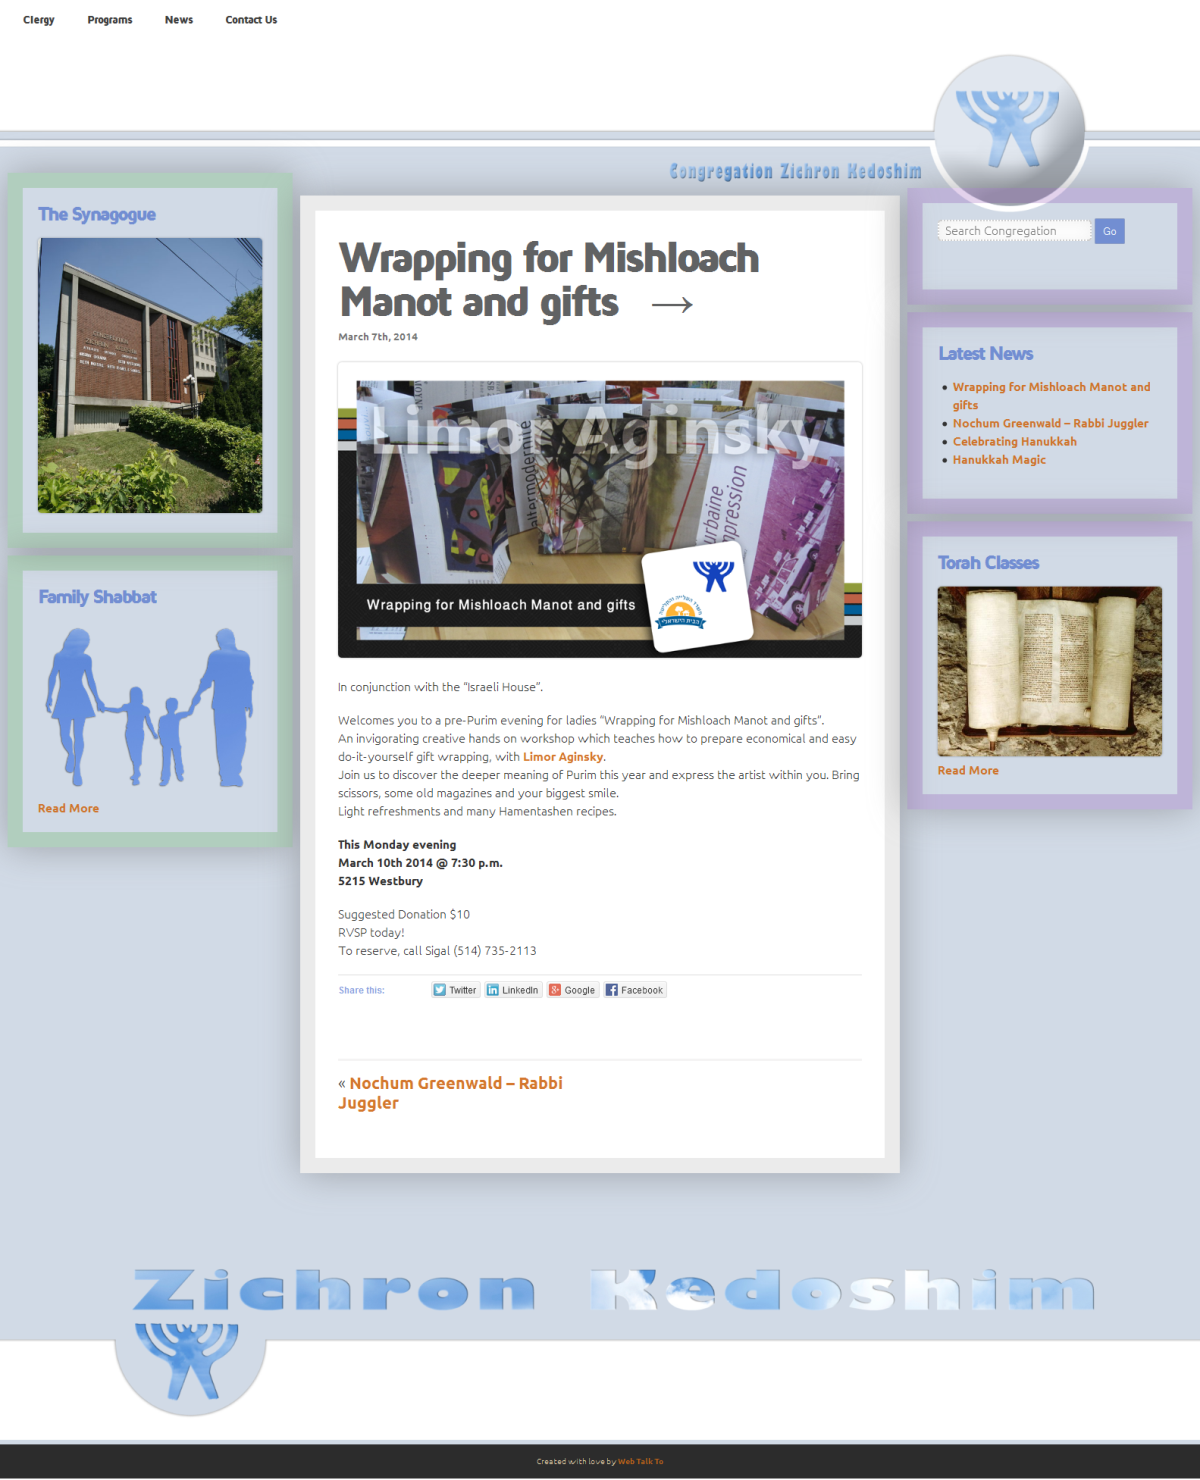 5 Design refresh for Zichron Kedoshim